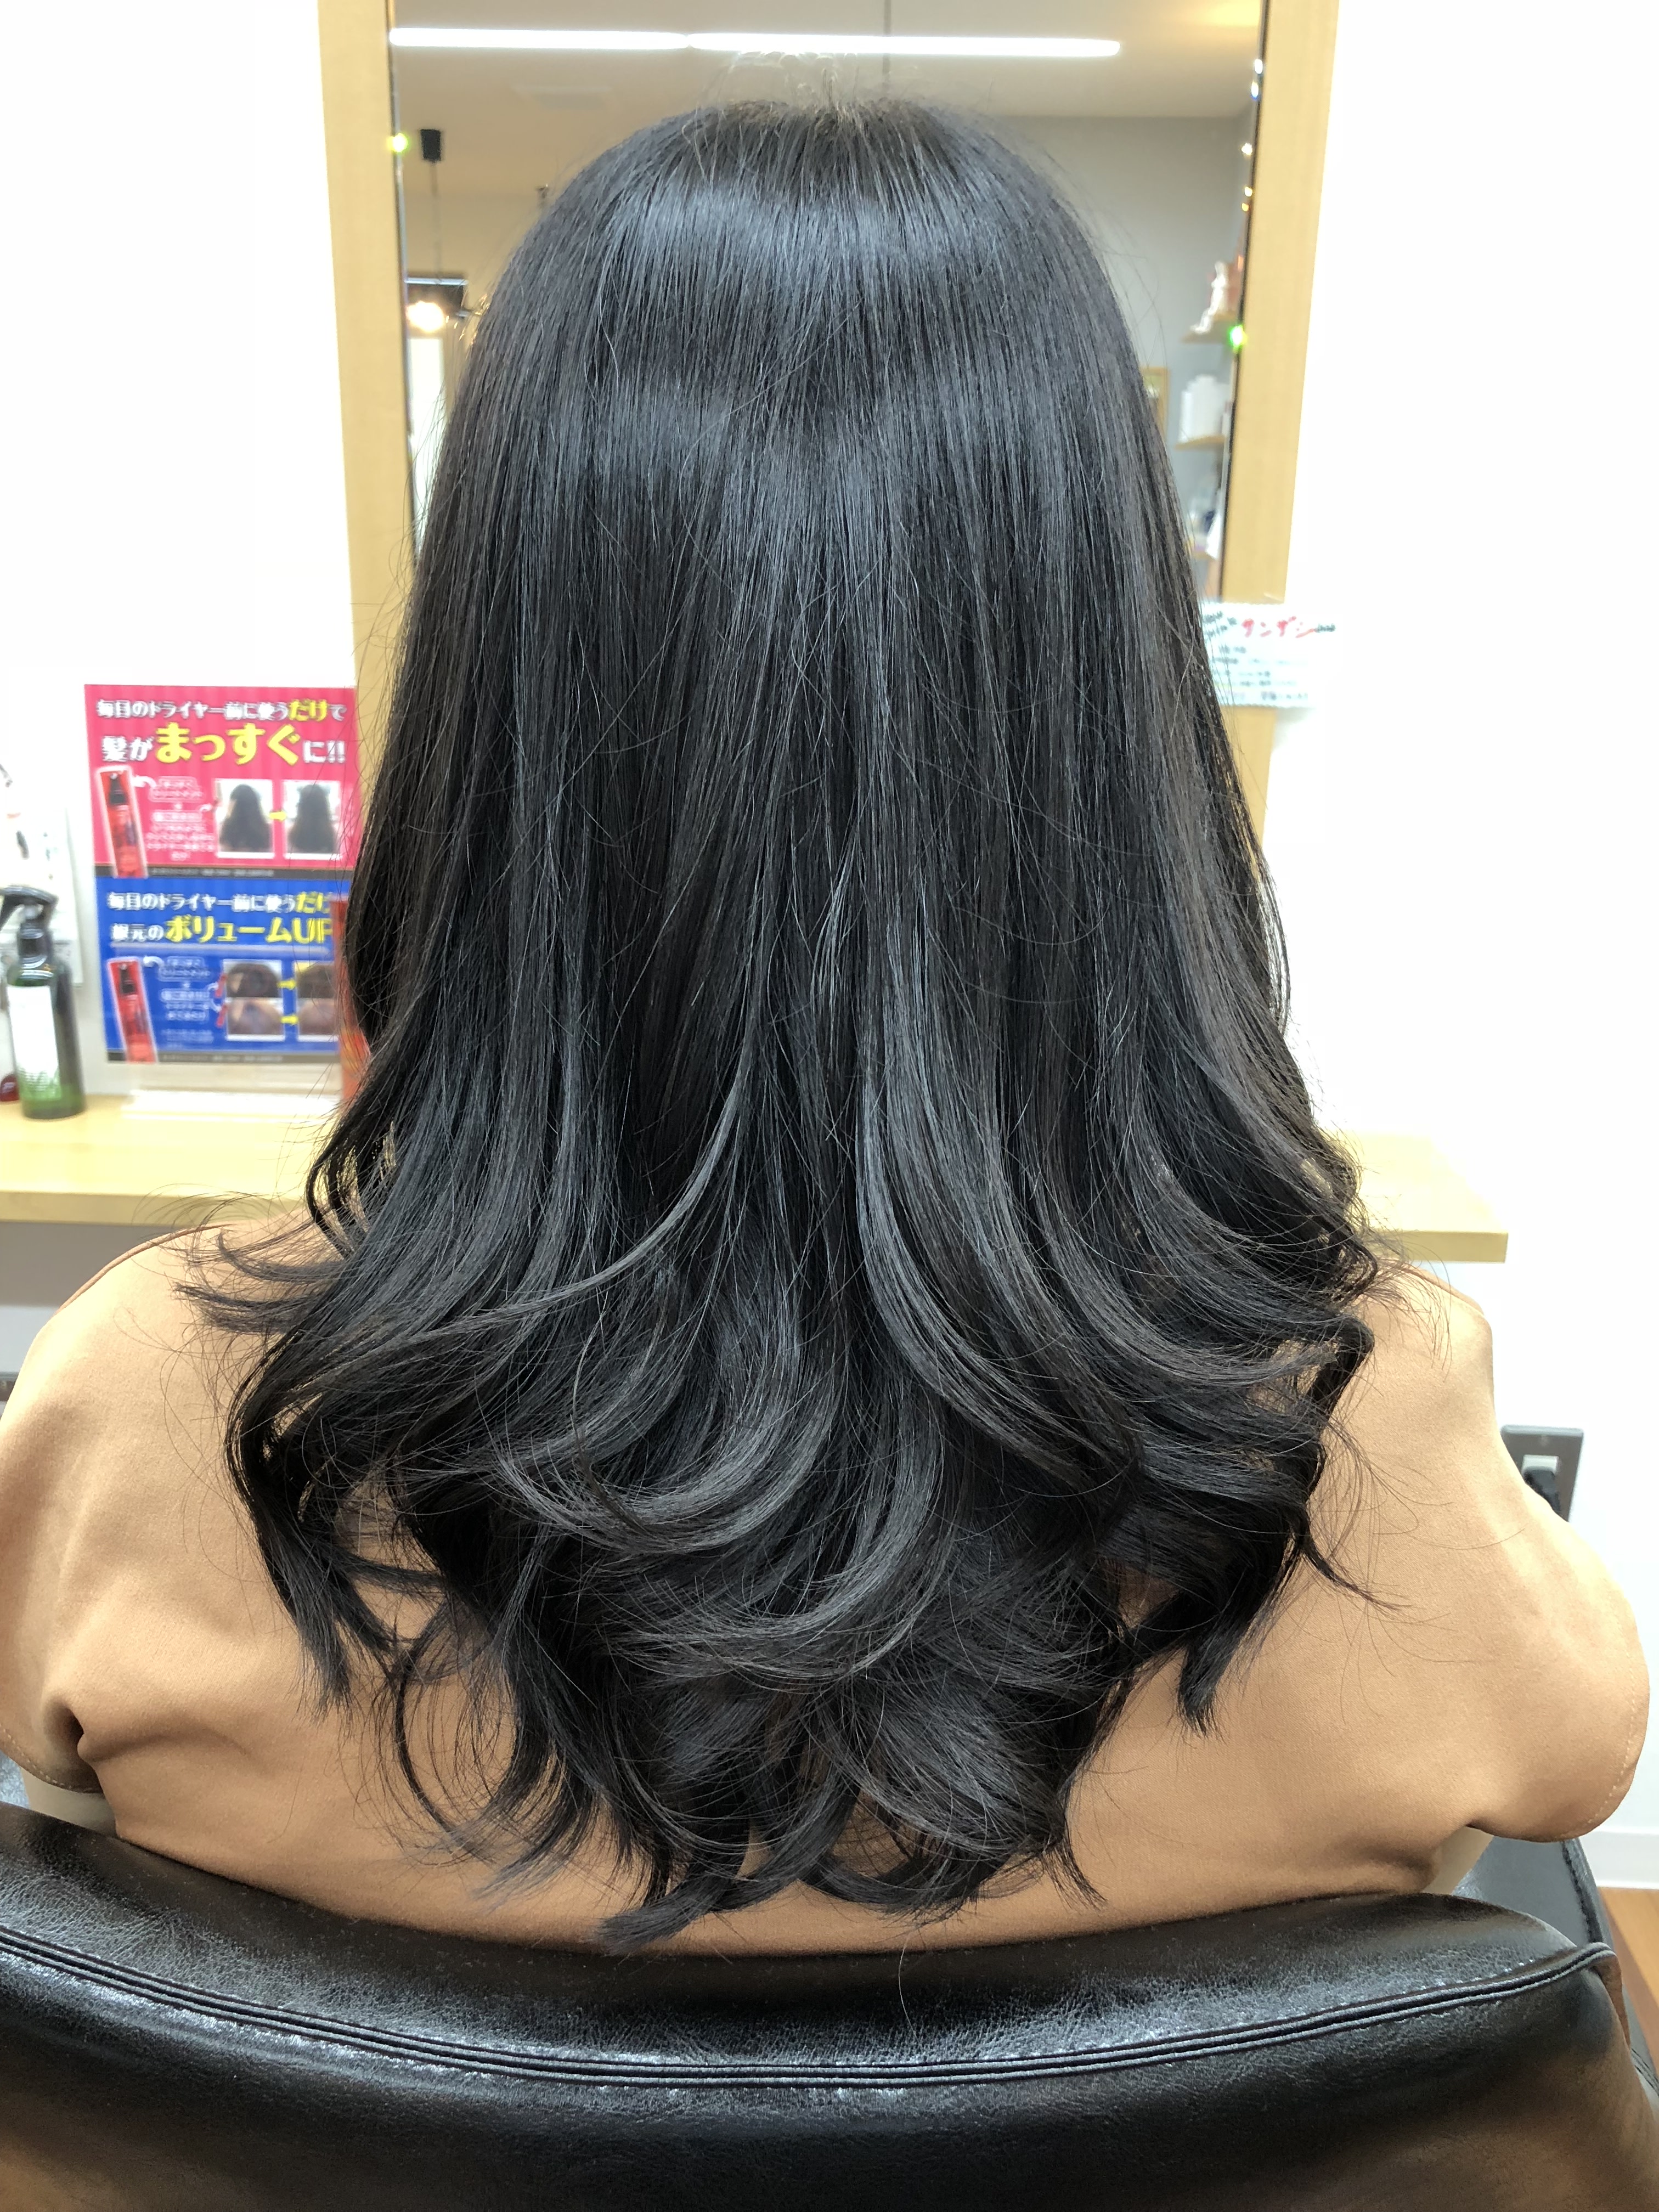 hair salon nita【ヘアーサロン ニータ】のスタイル紹介。ロング×毛髪補修トリートメント